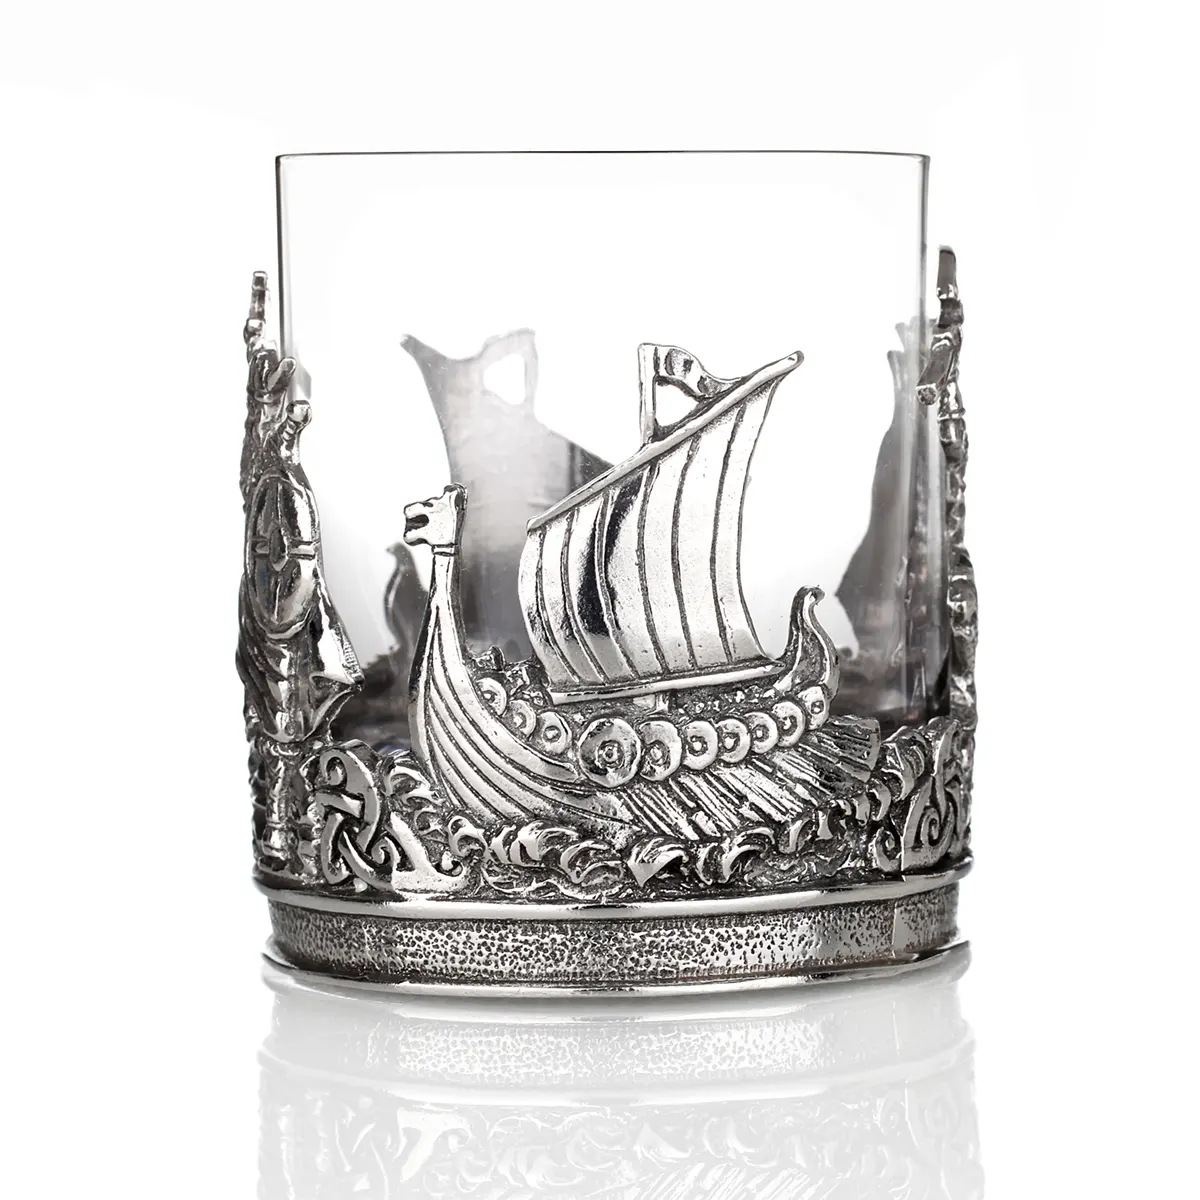 Viking Whisky Tumbler - Handgefertigtes Wikinger Whiskyglas aus England